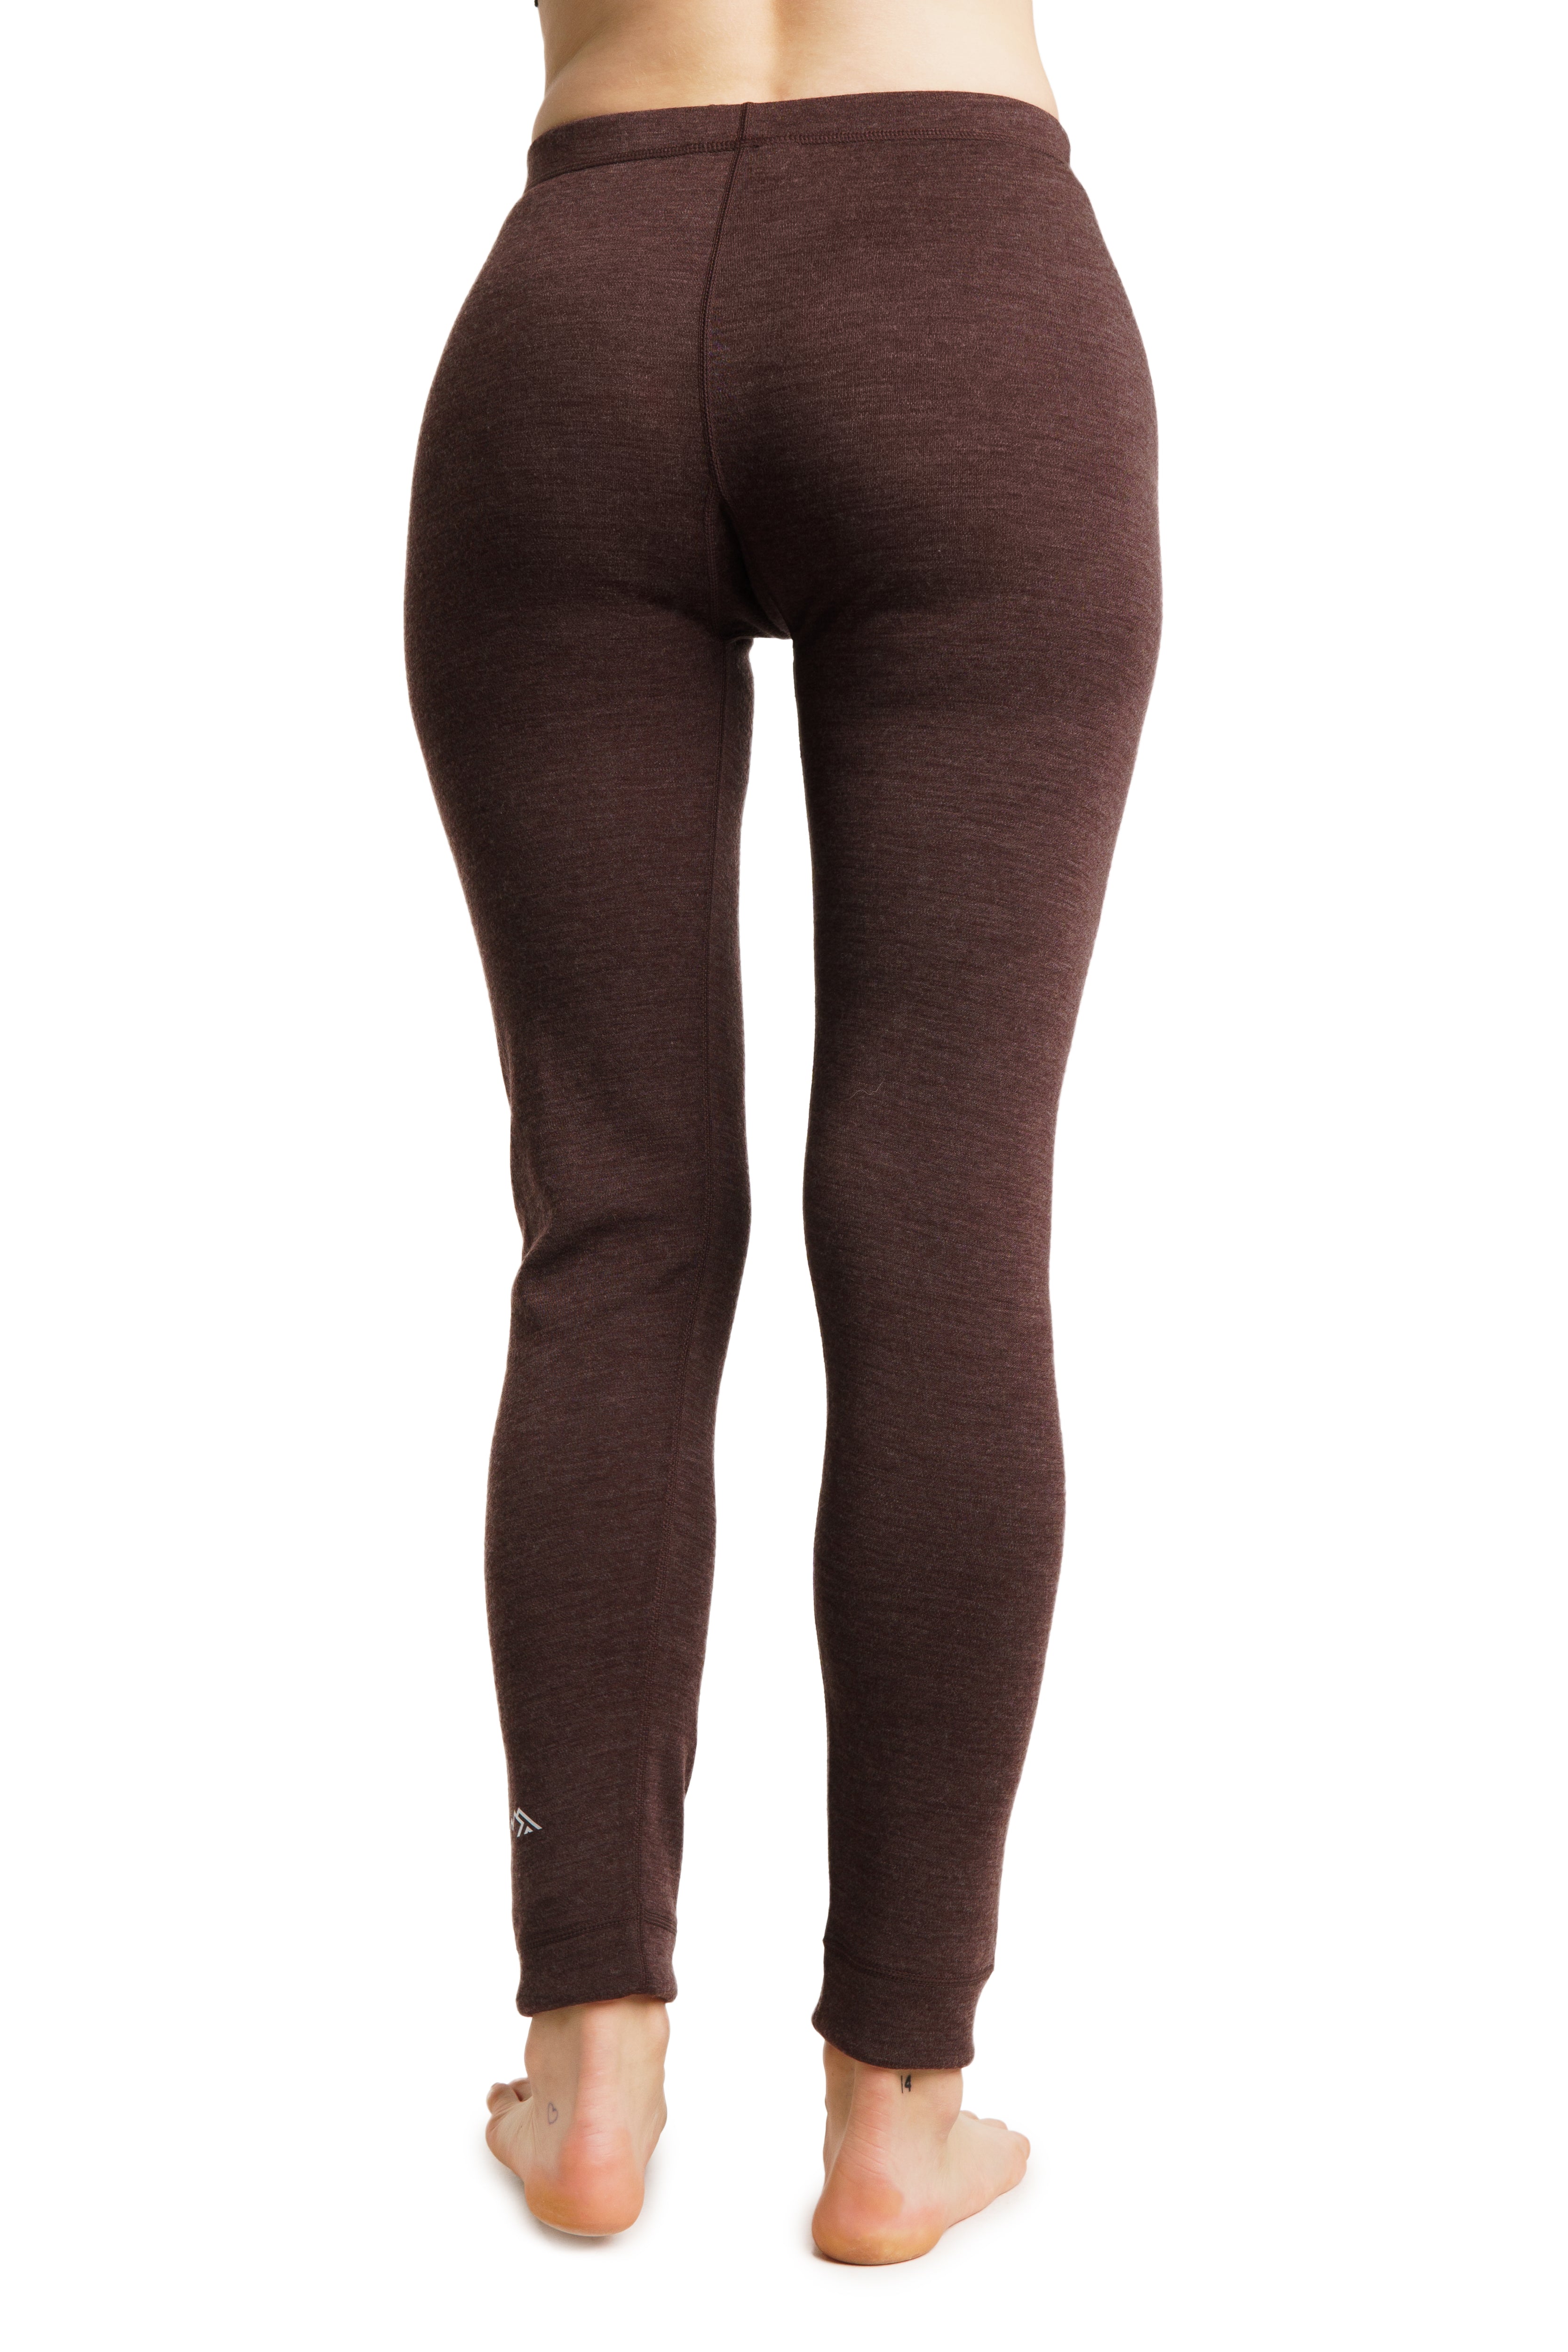 Women's Merino Wool Pants - Base Layer Chocolate, Bottom, Underwear, Thermal Leggings, Midweight